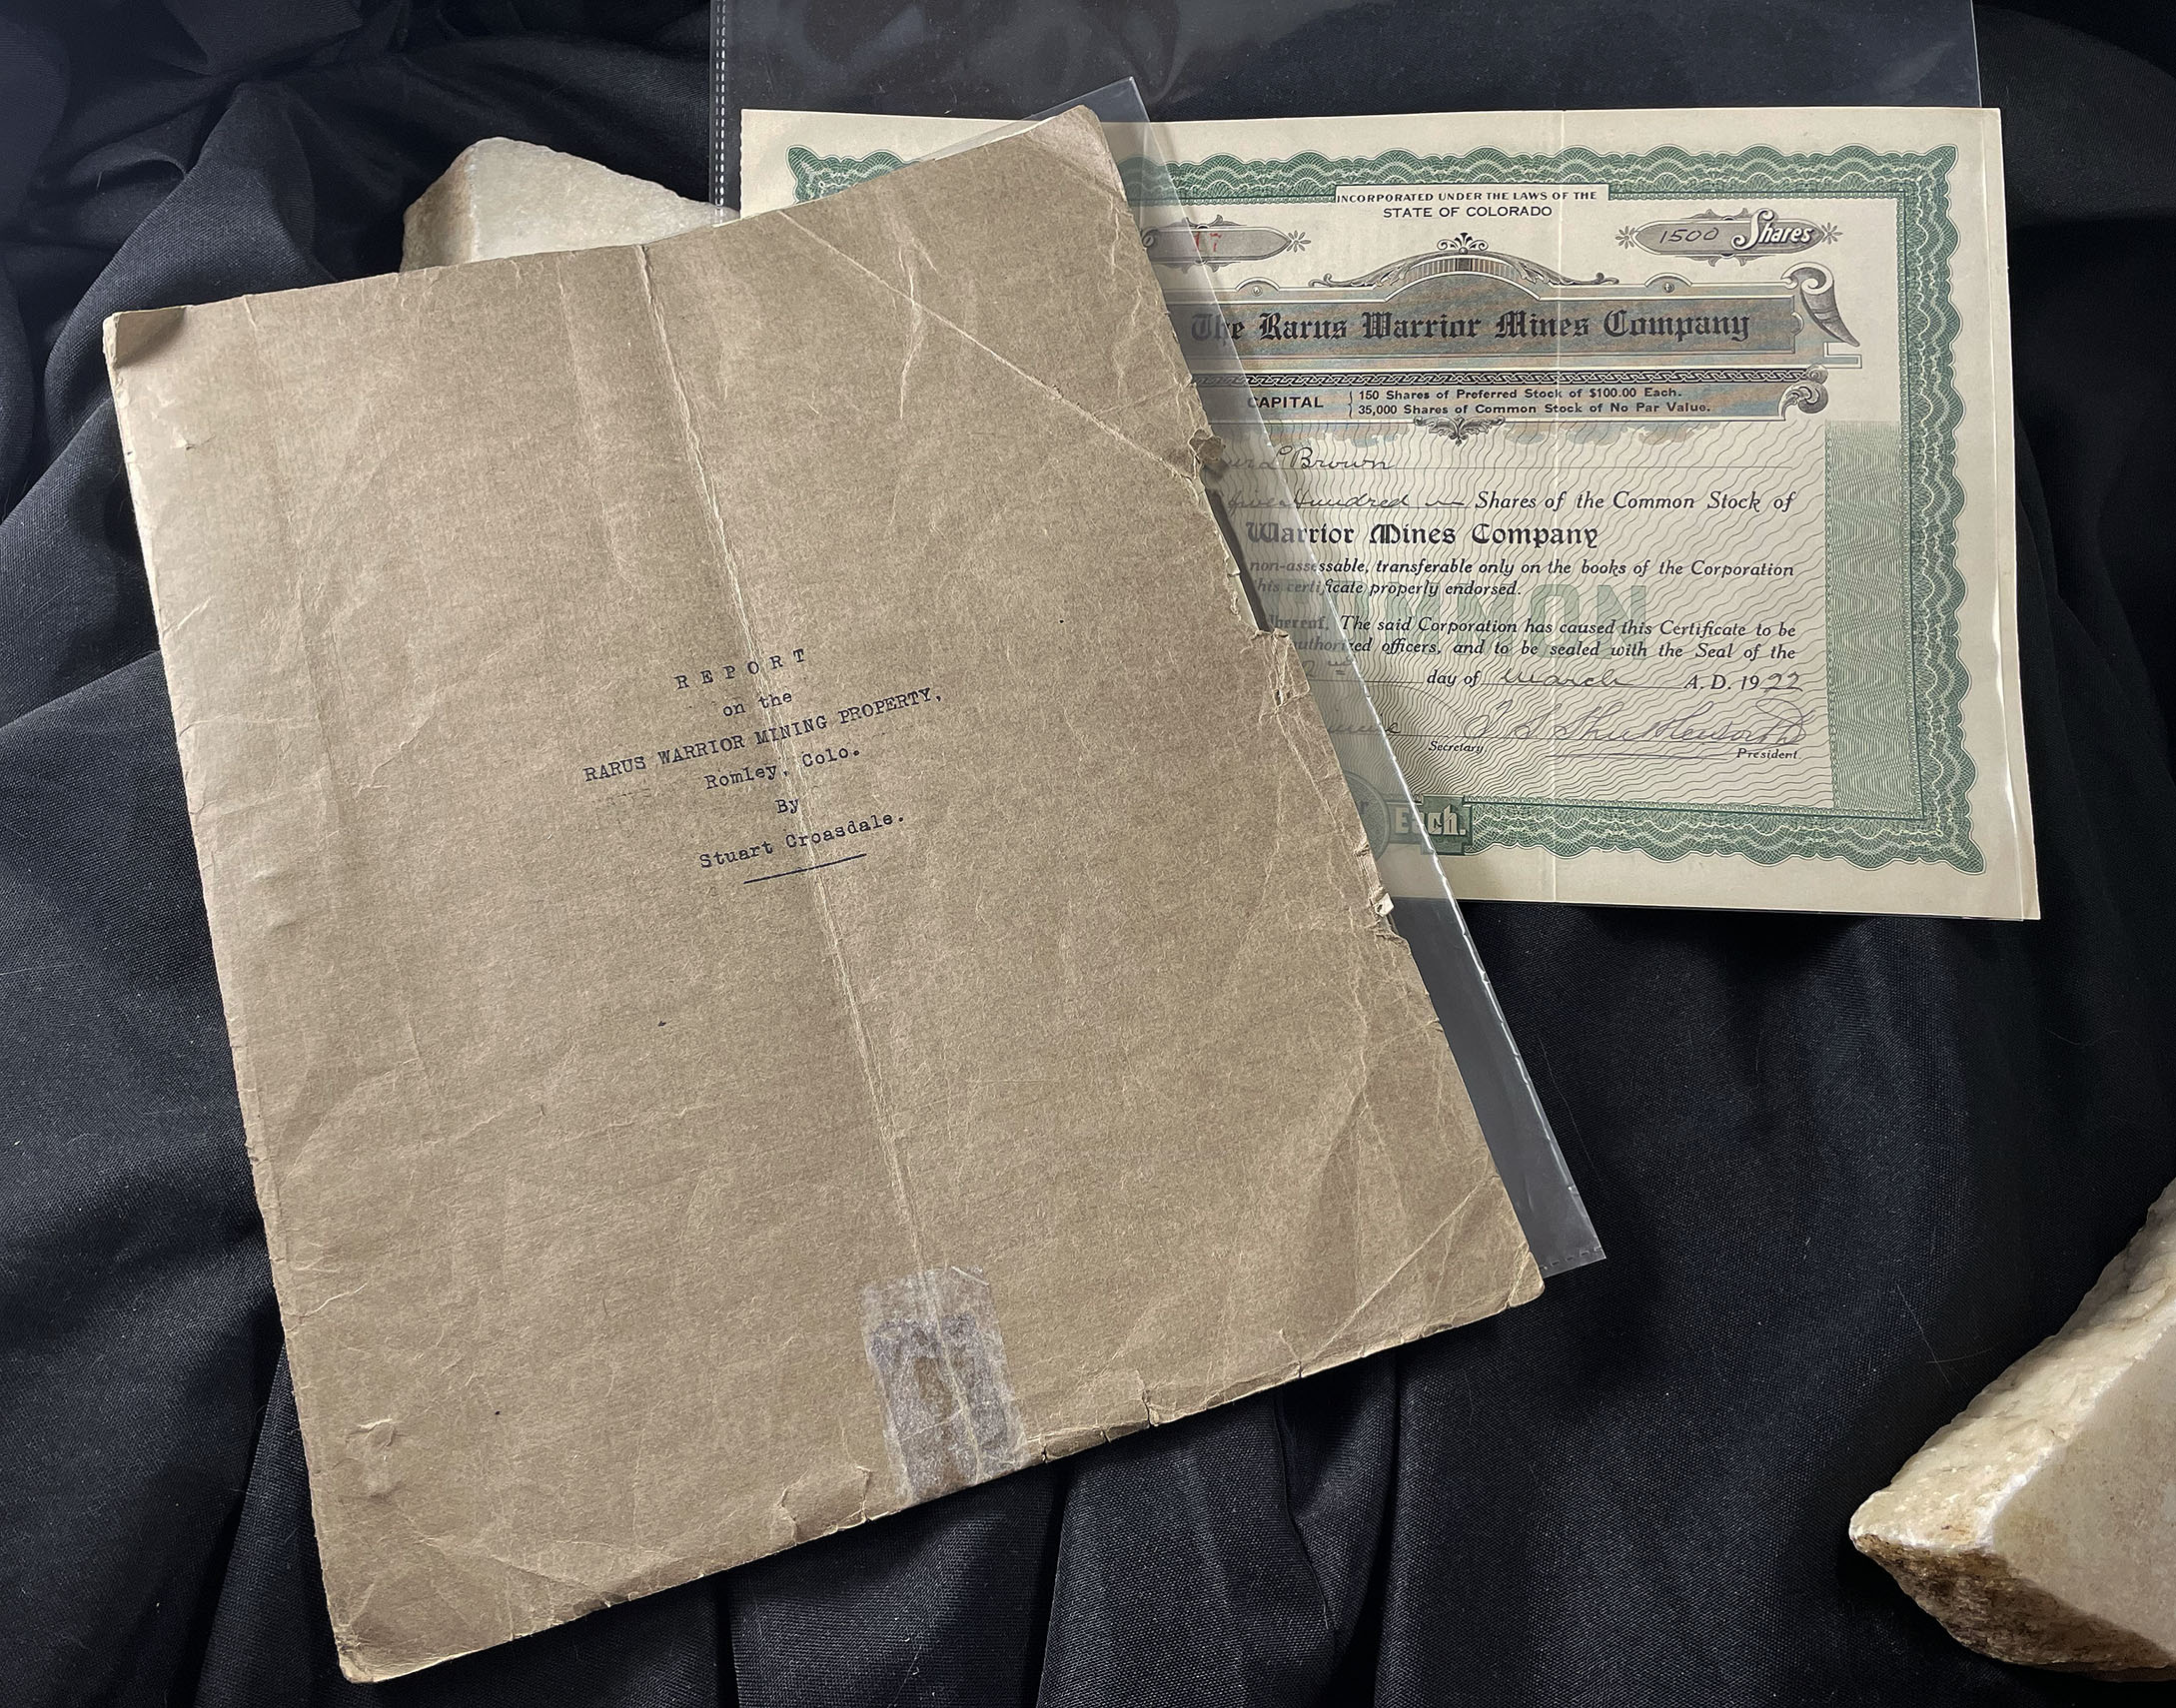 Rarus Warrior Mining Report Romley Chaffee County Colorado & Southern Railway photo stock certificate 1922